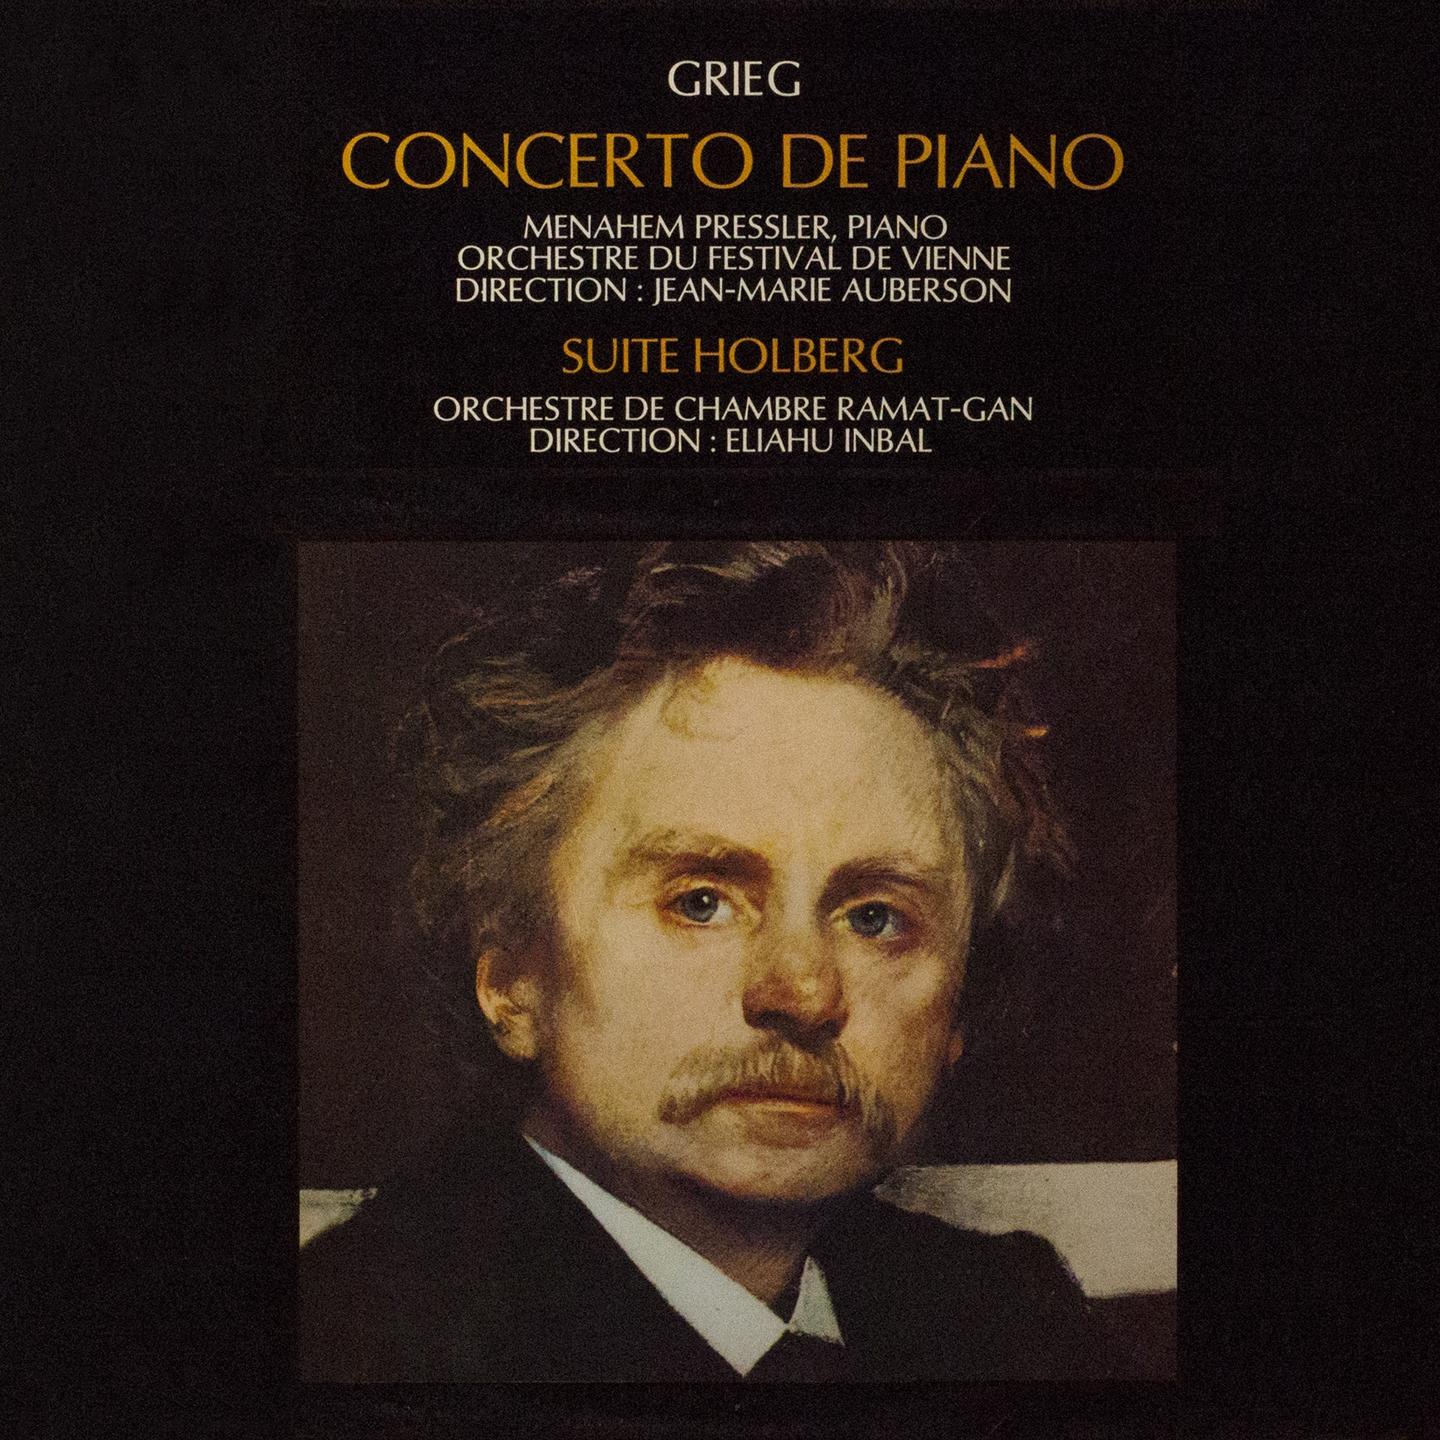 Grieg: Concerto pour piano & Suite Holberg